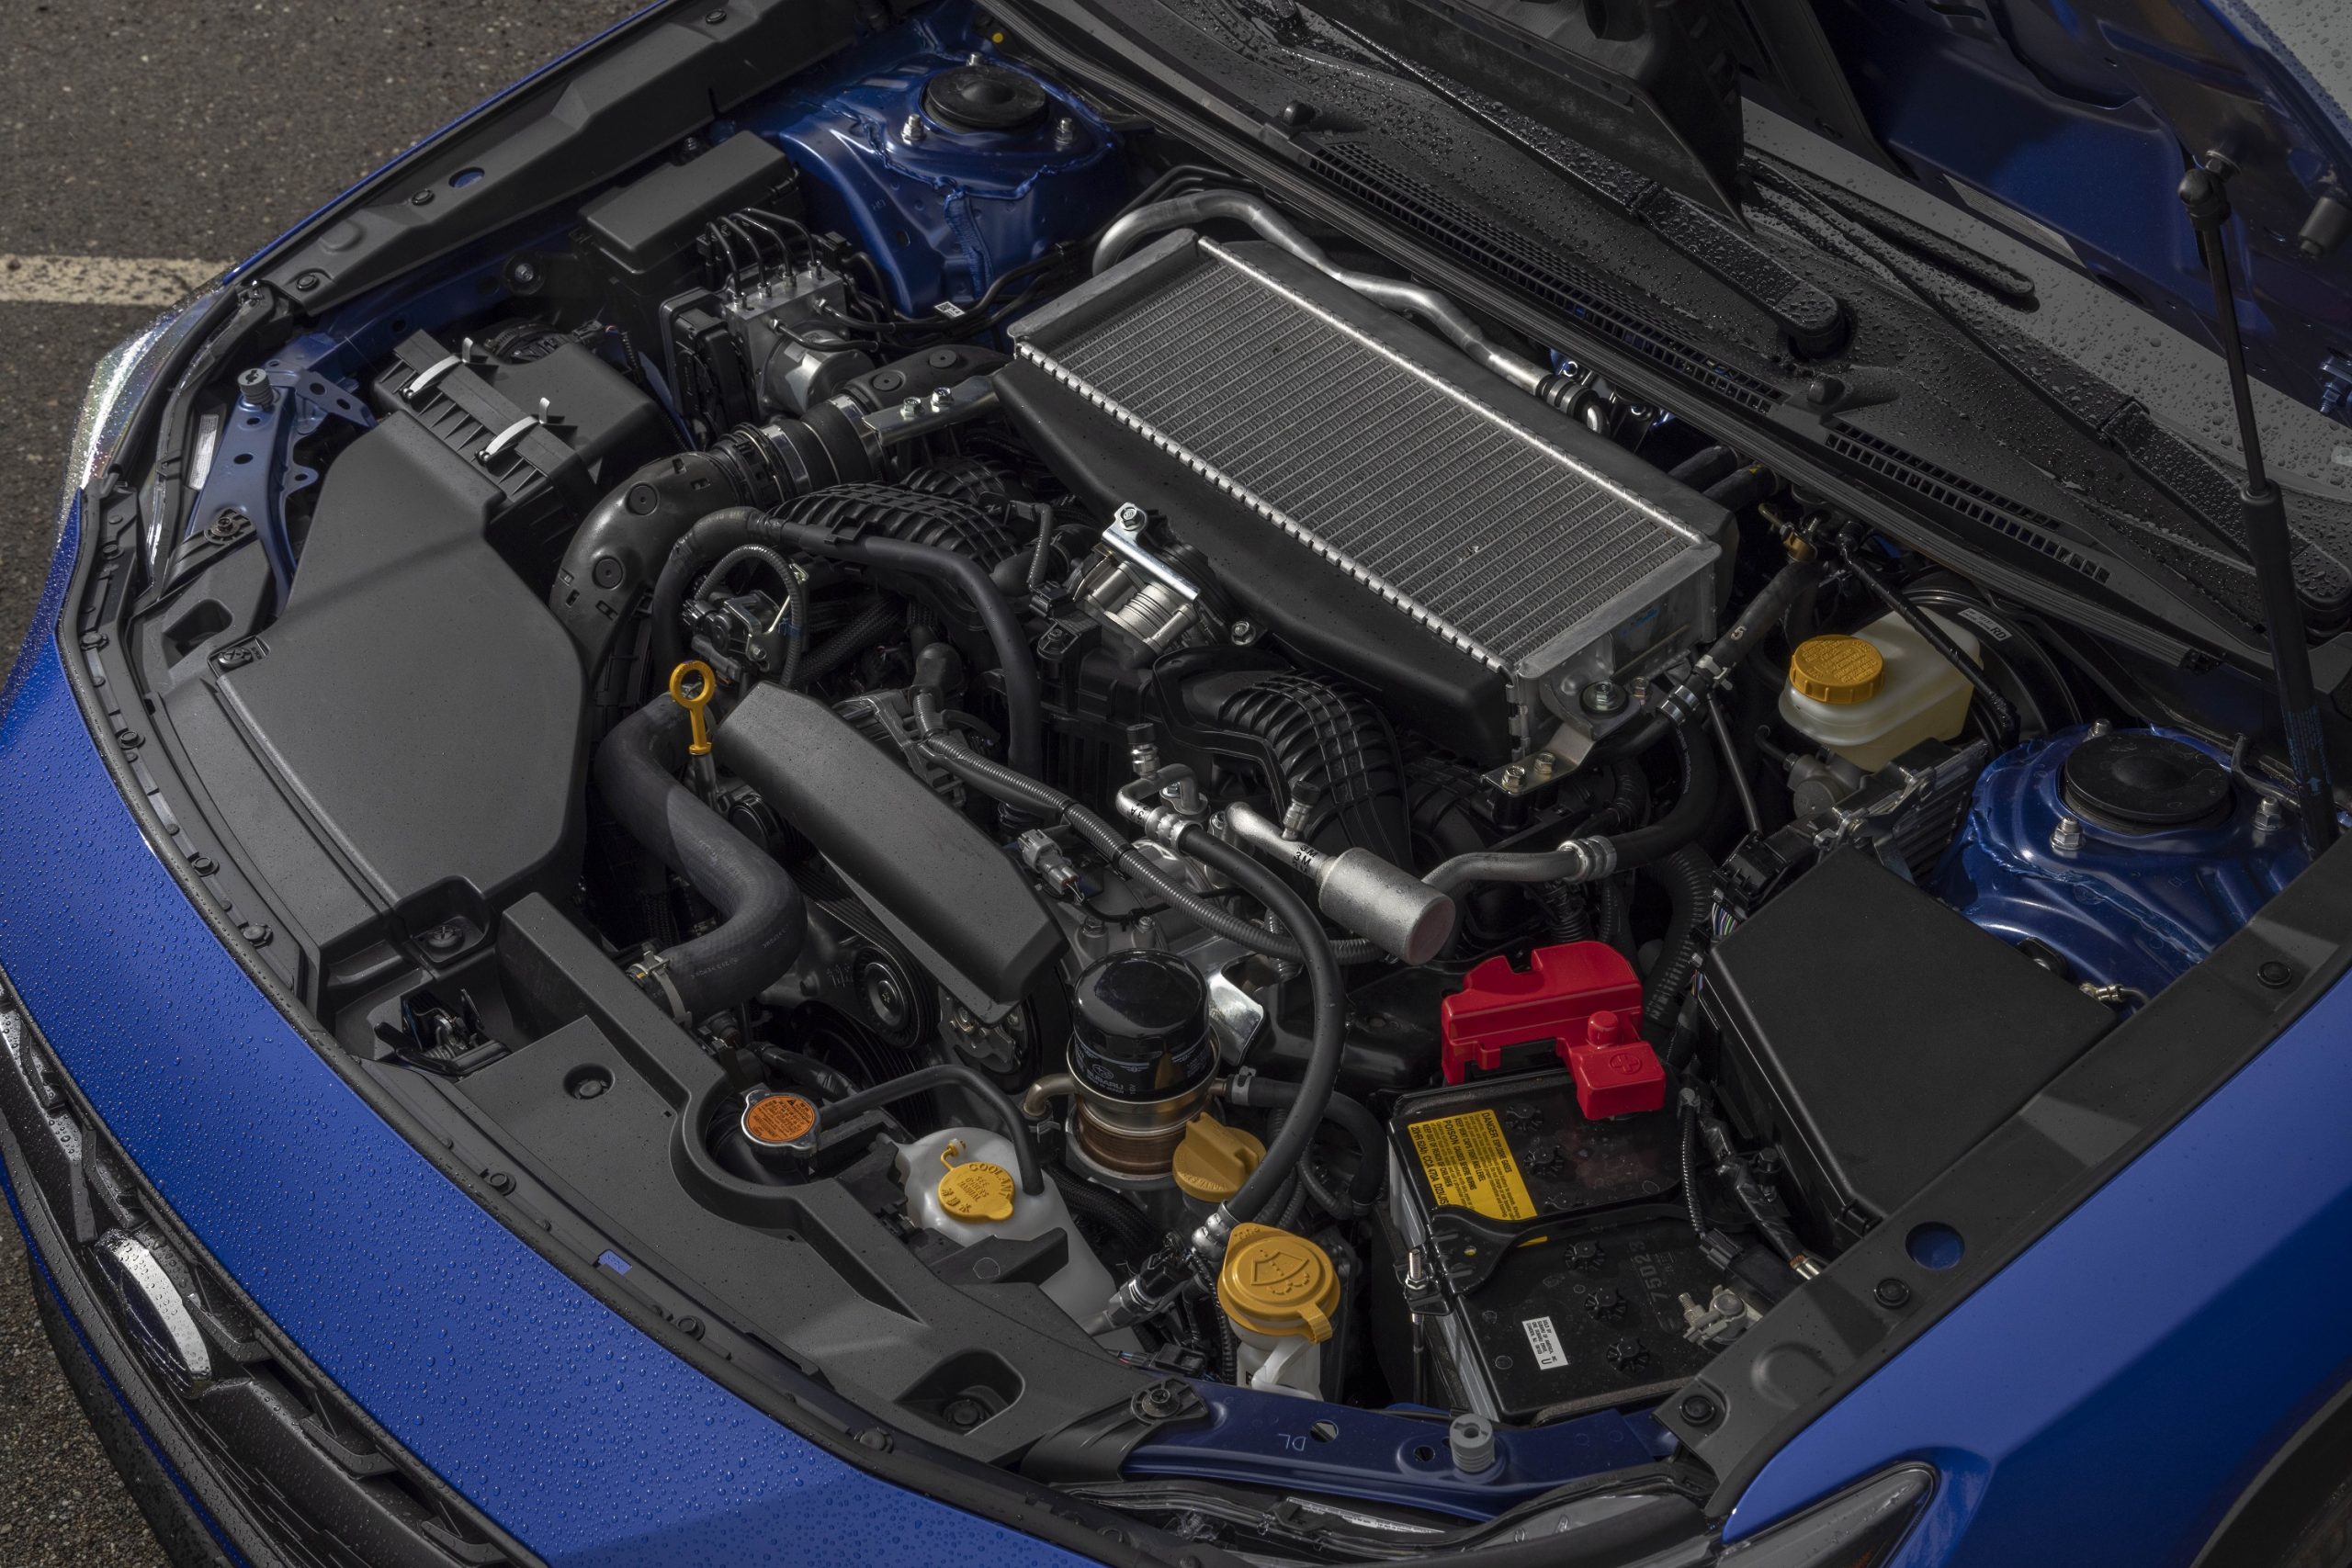 The Subaru WRX's 2.4L engine